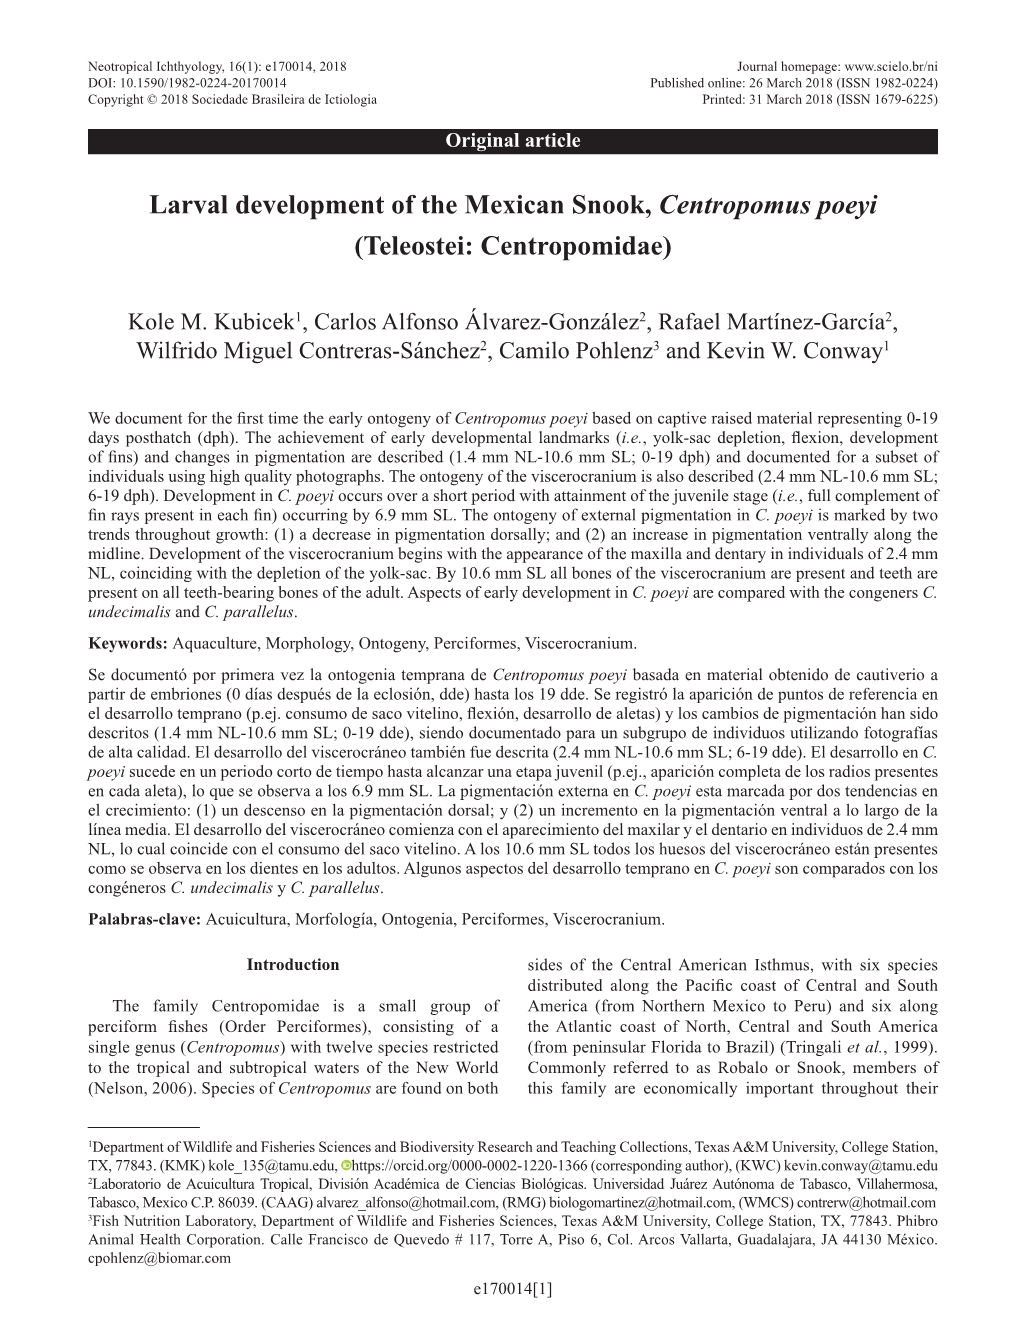 Larval Development of the Mexican Snook, Centropomus Poeyi (Teleostei: Centropomidae)